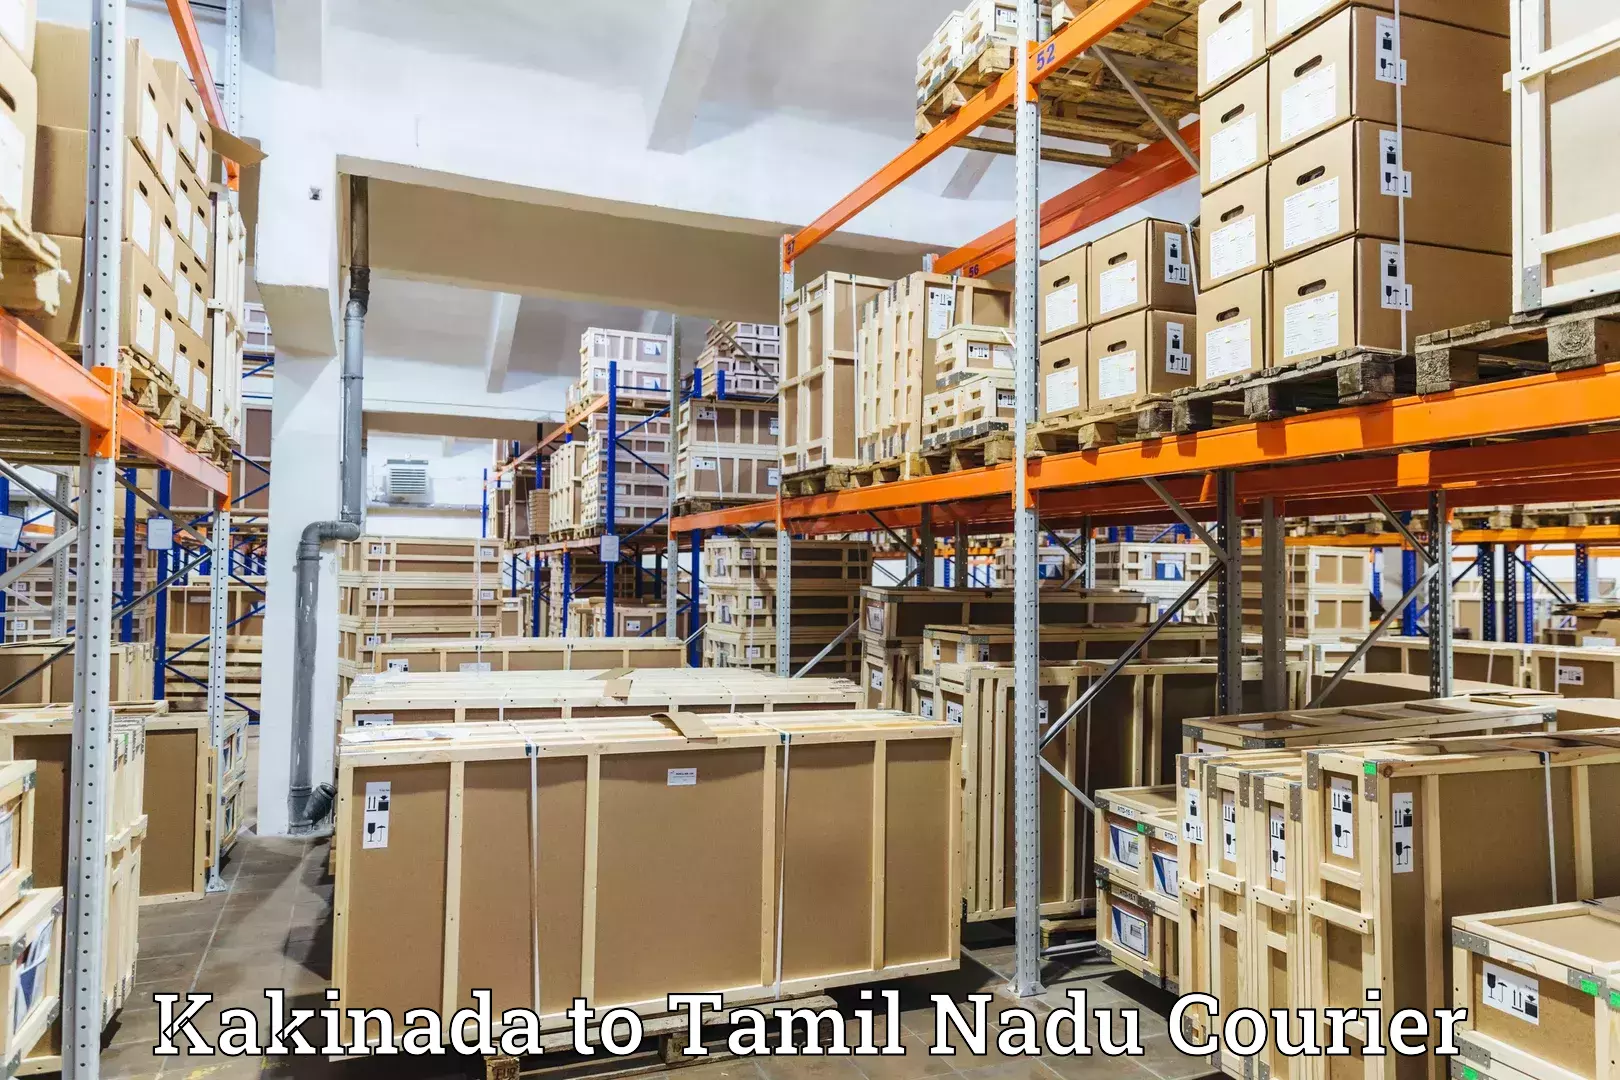 Courier service comparison Kakinada to Namakkal